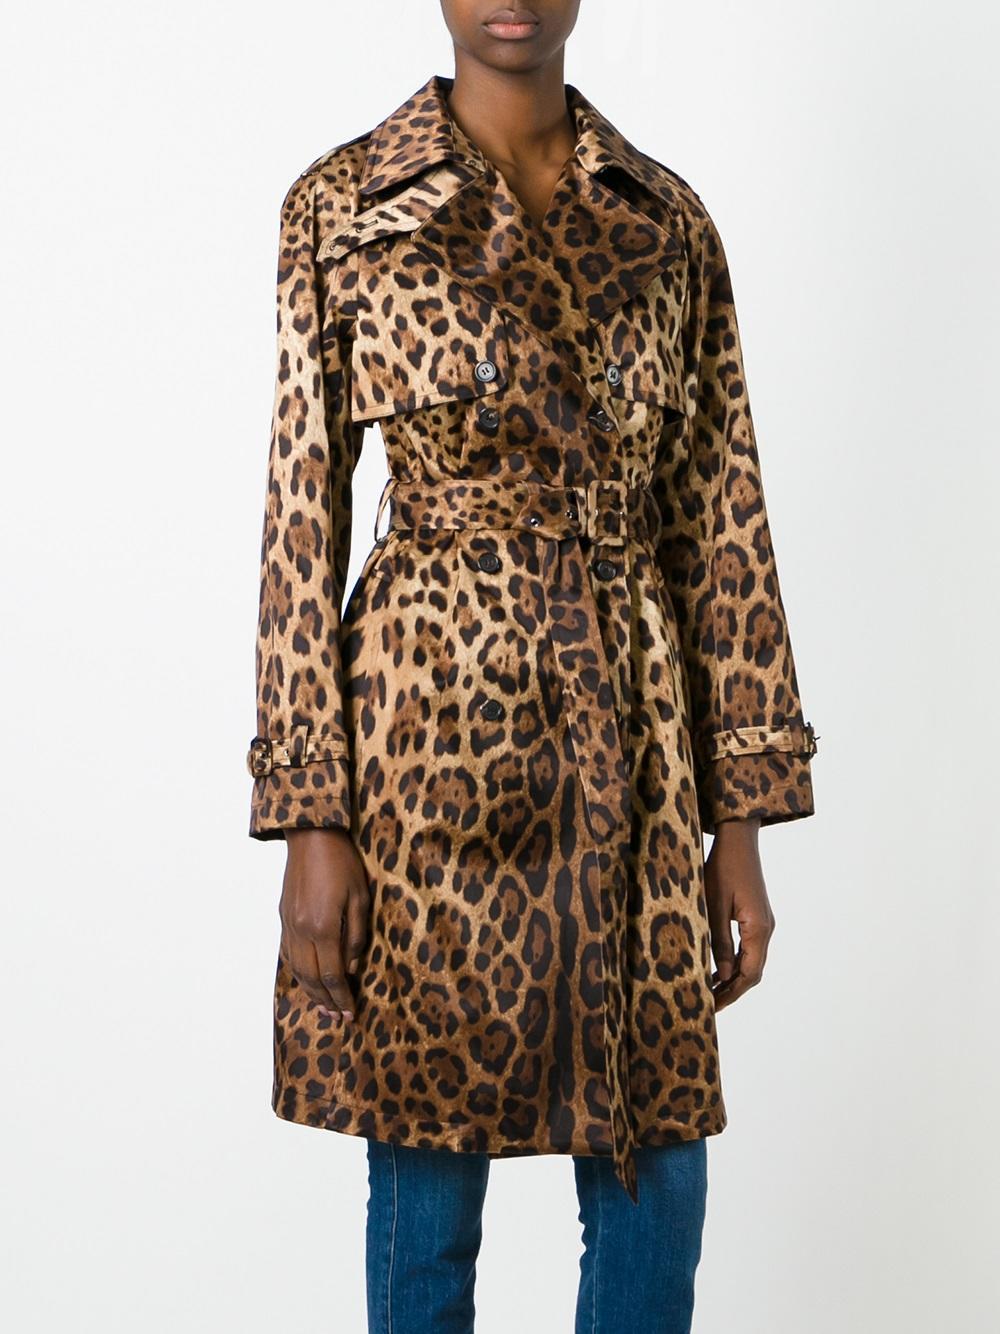 Dolce & Gabbana Leopard Print Trench Coat in Brown